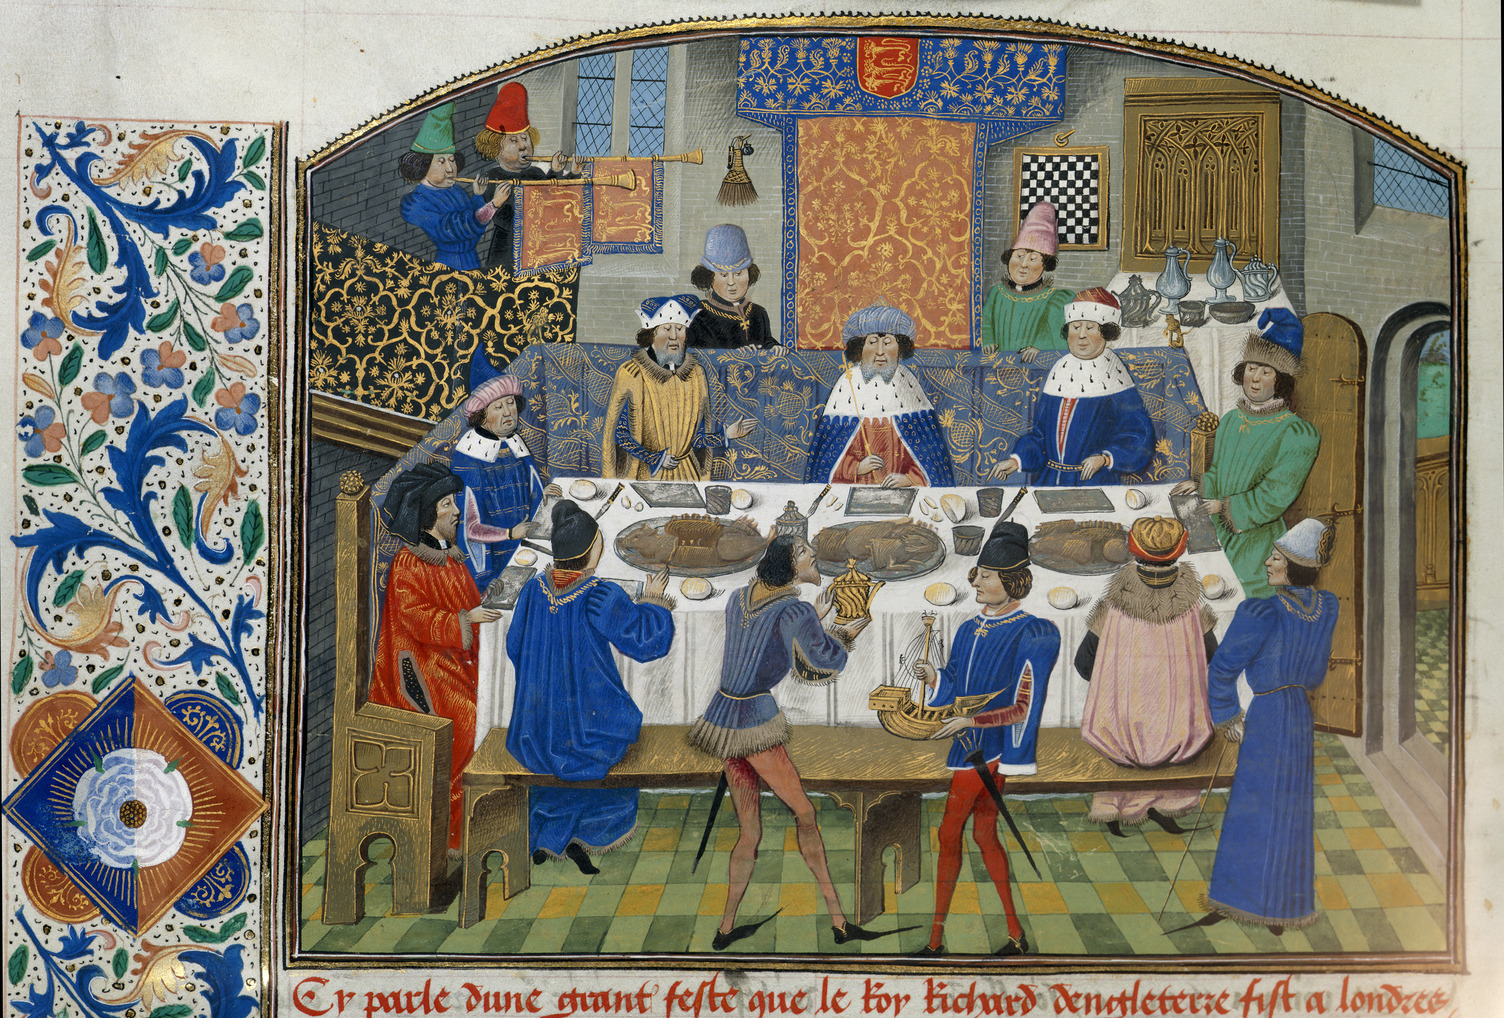 Középkori főúri lakoma a 15. század végén. Richard II dines with dukes (Miniature) The Dukes of York, Gloucester and Ireland dine with King Richard II.